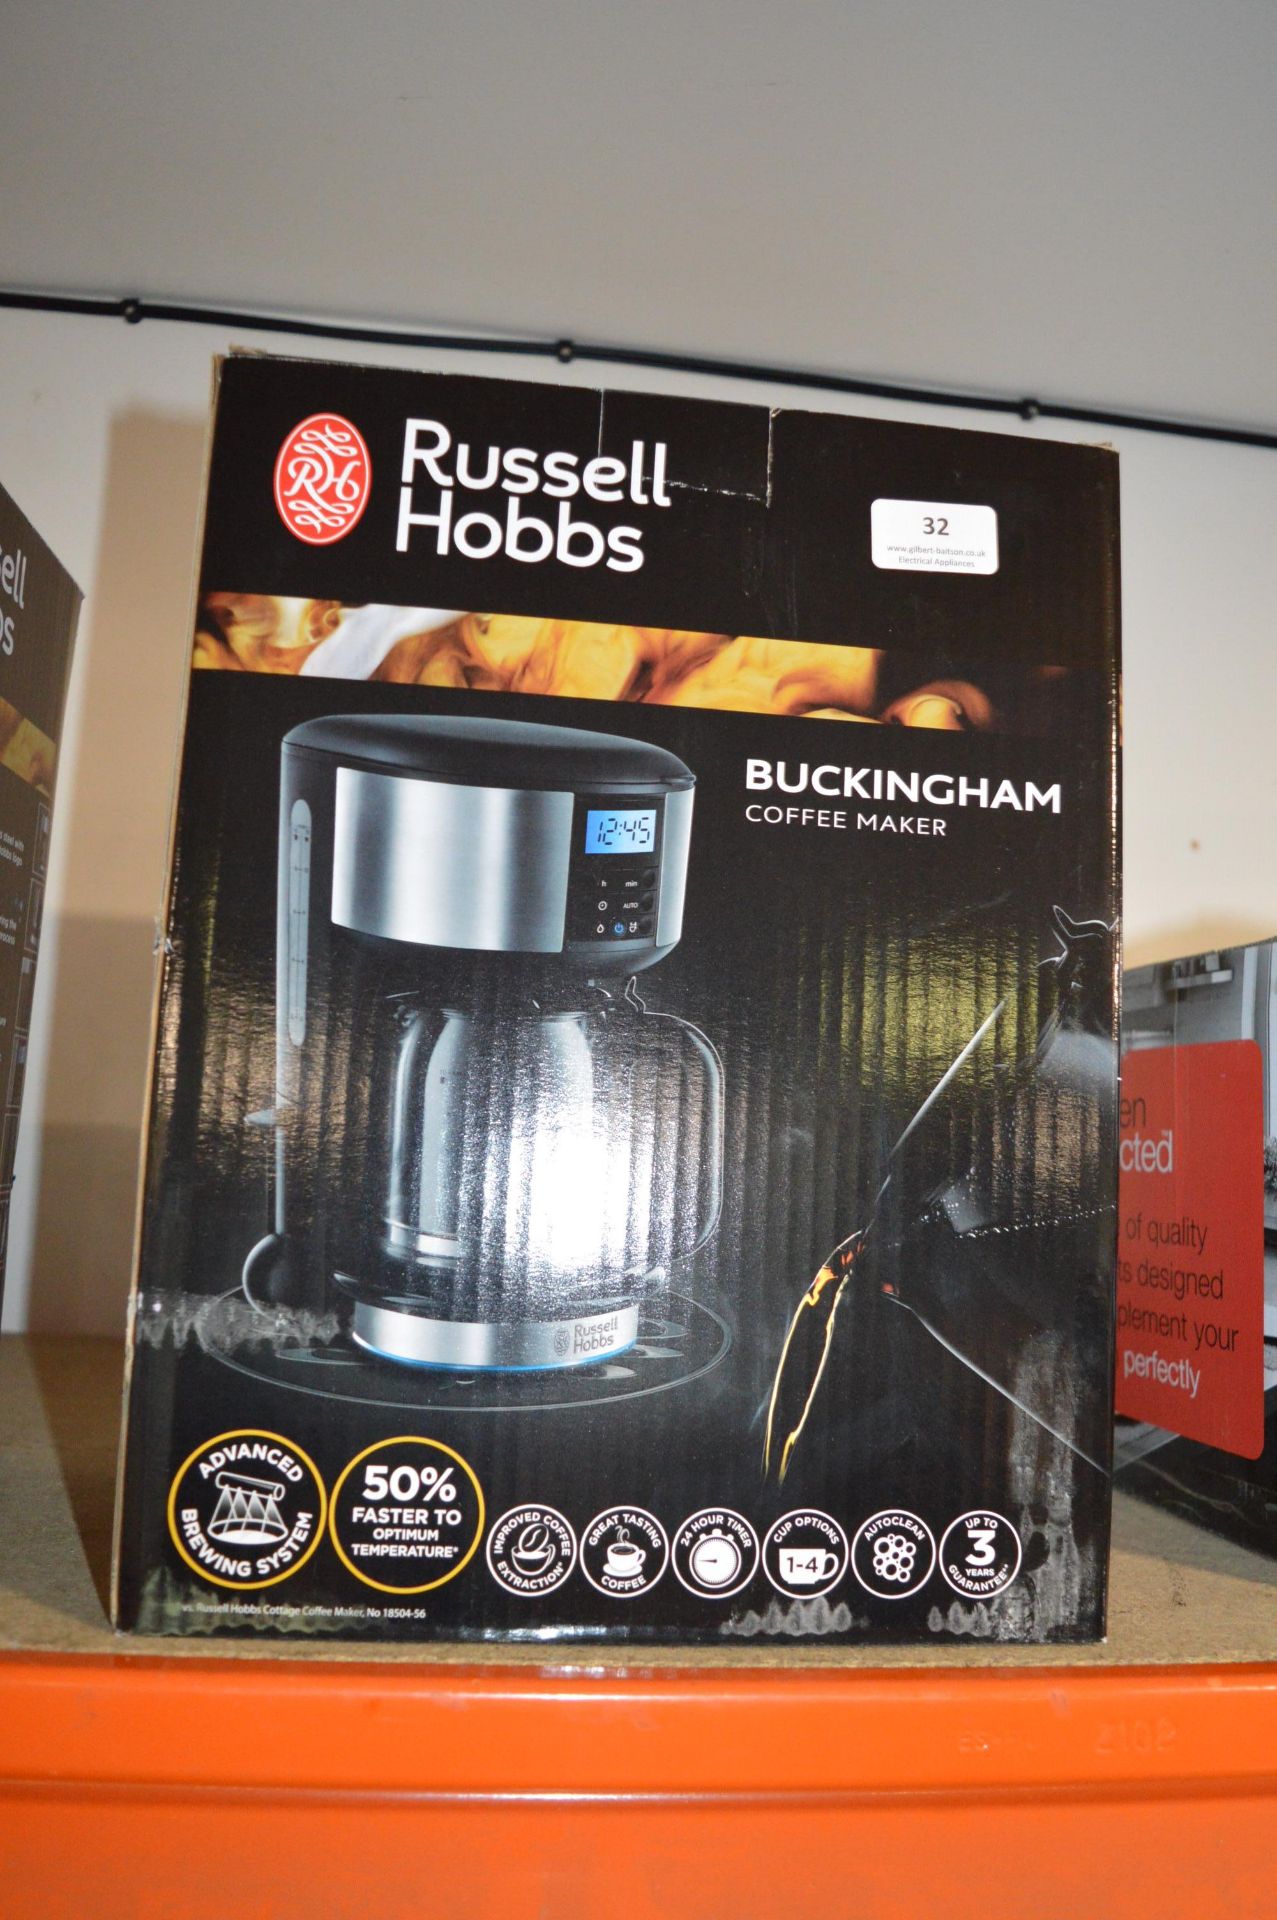 *Russell Hobbs Buckingham Coffee Maker